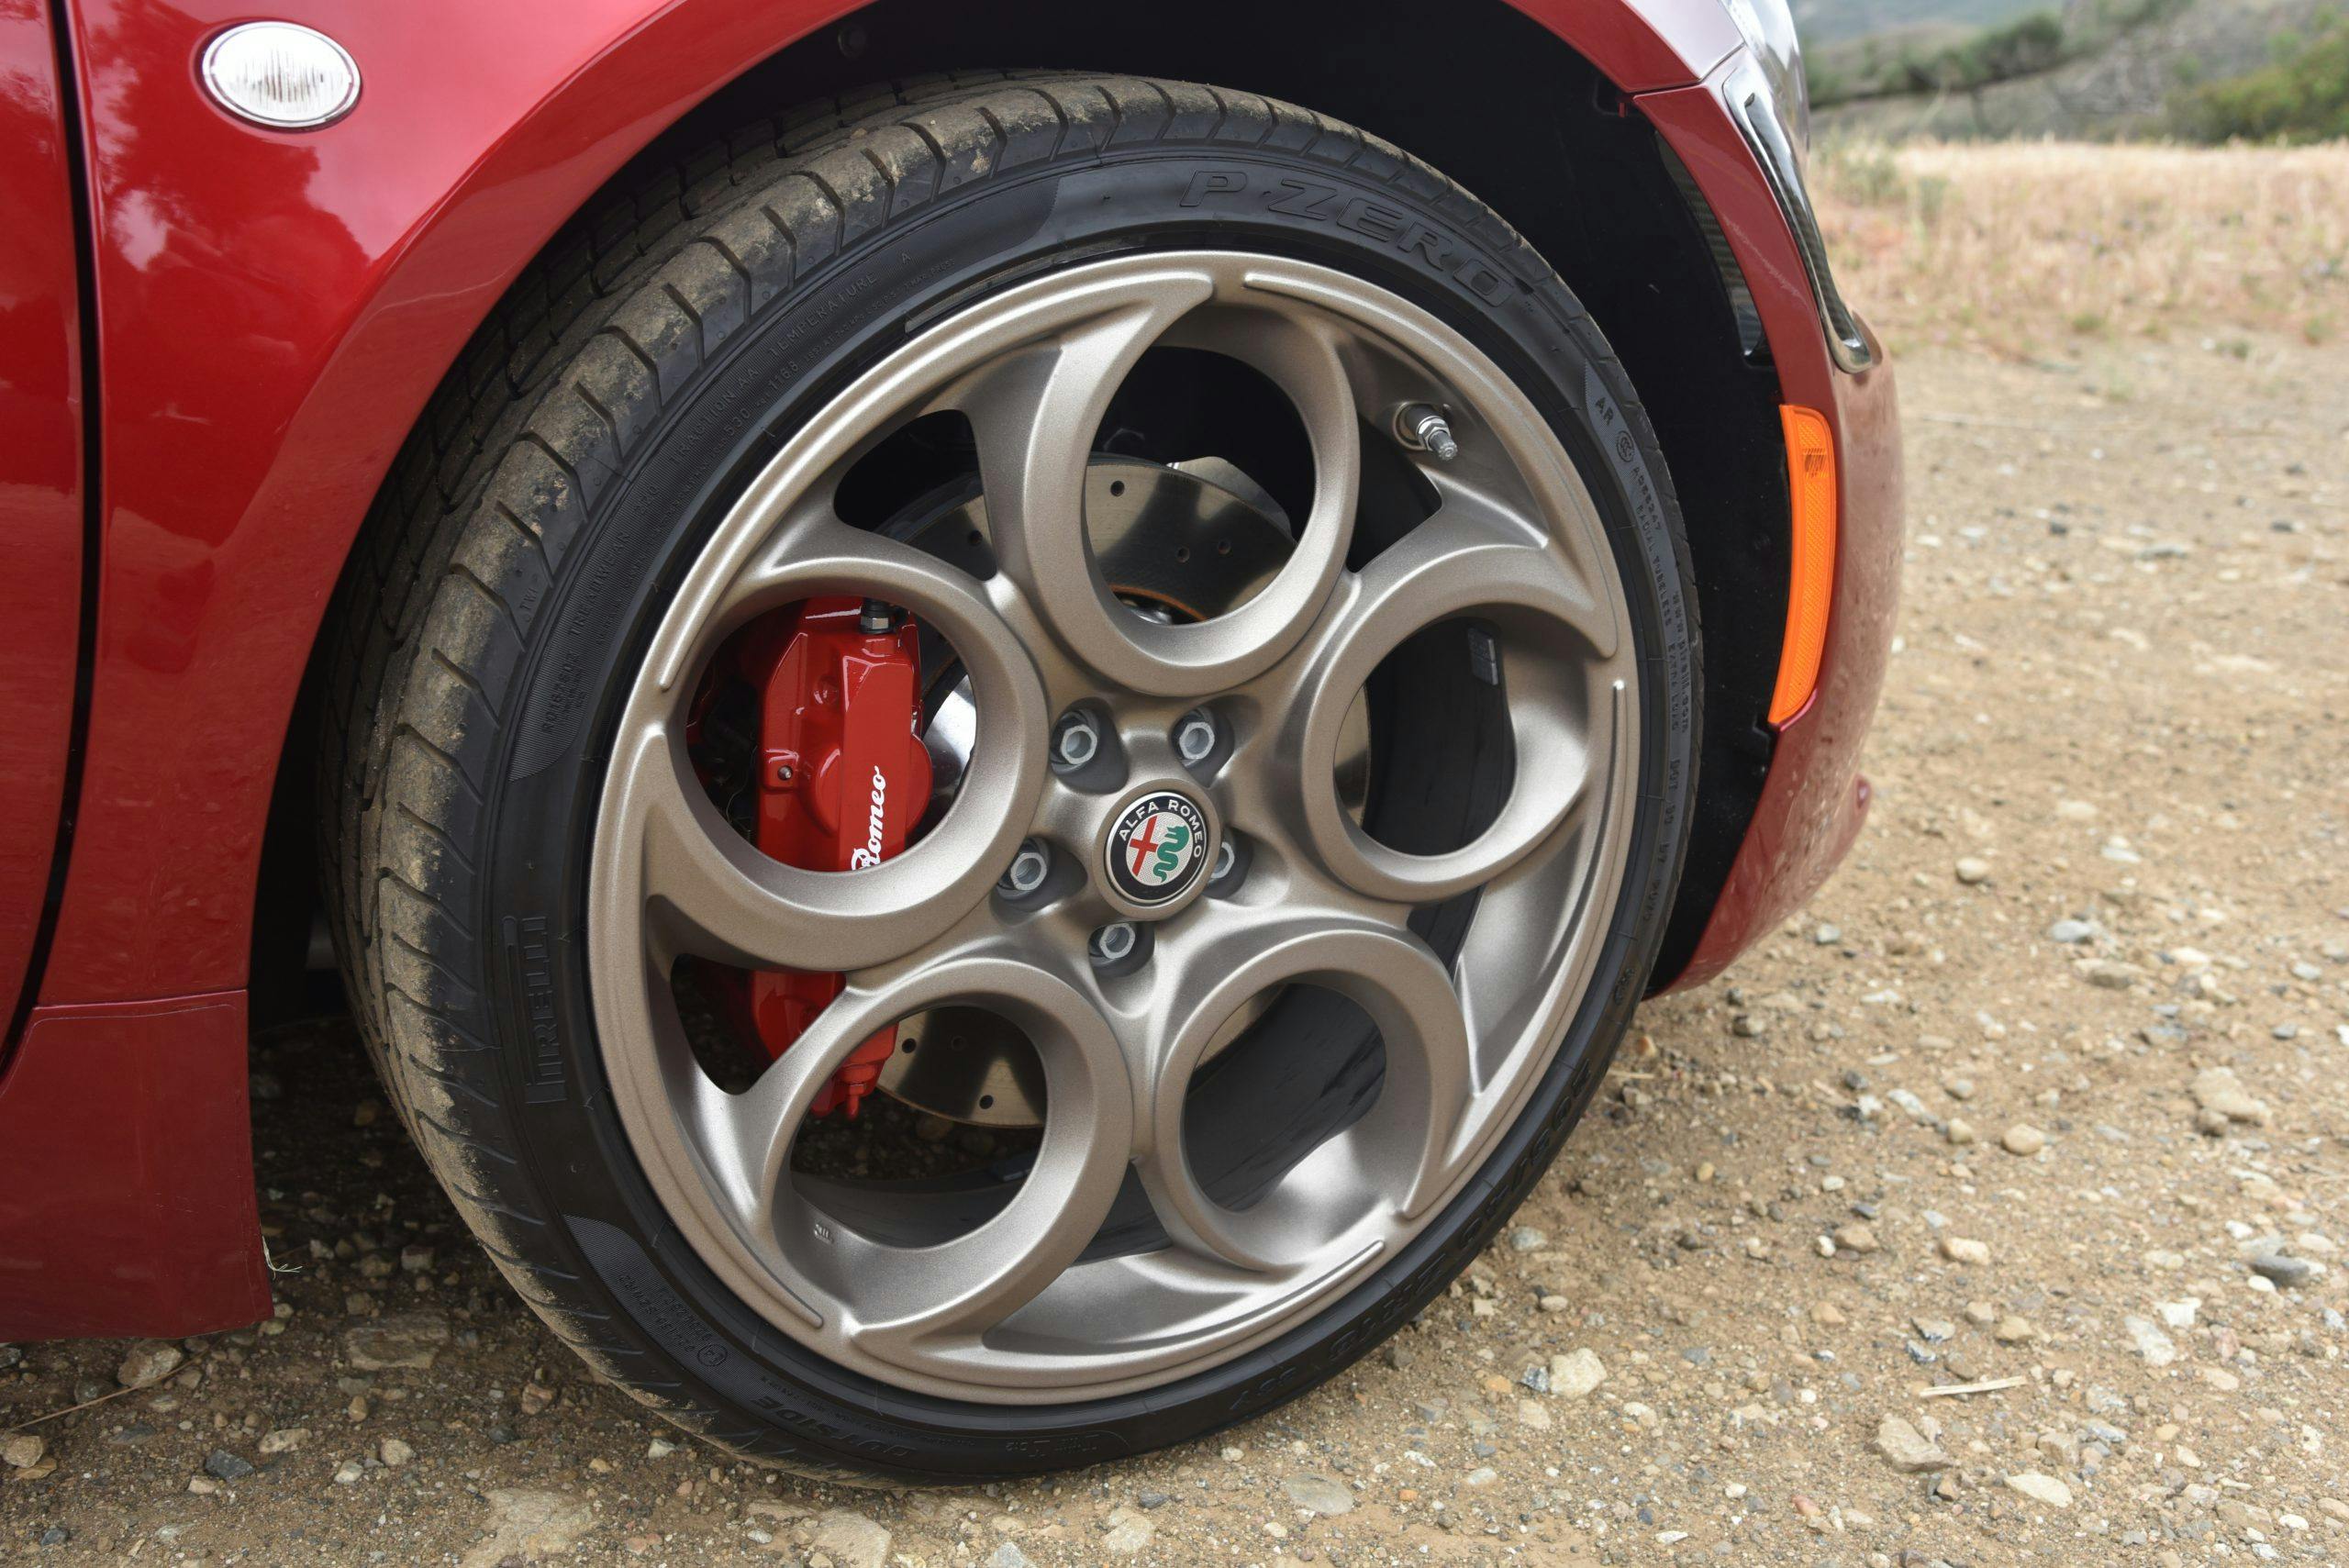 Alfa Romeo MiTo replacement seemingly in the pipeline